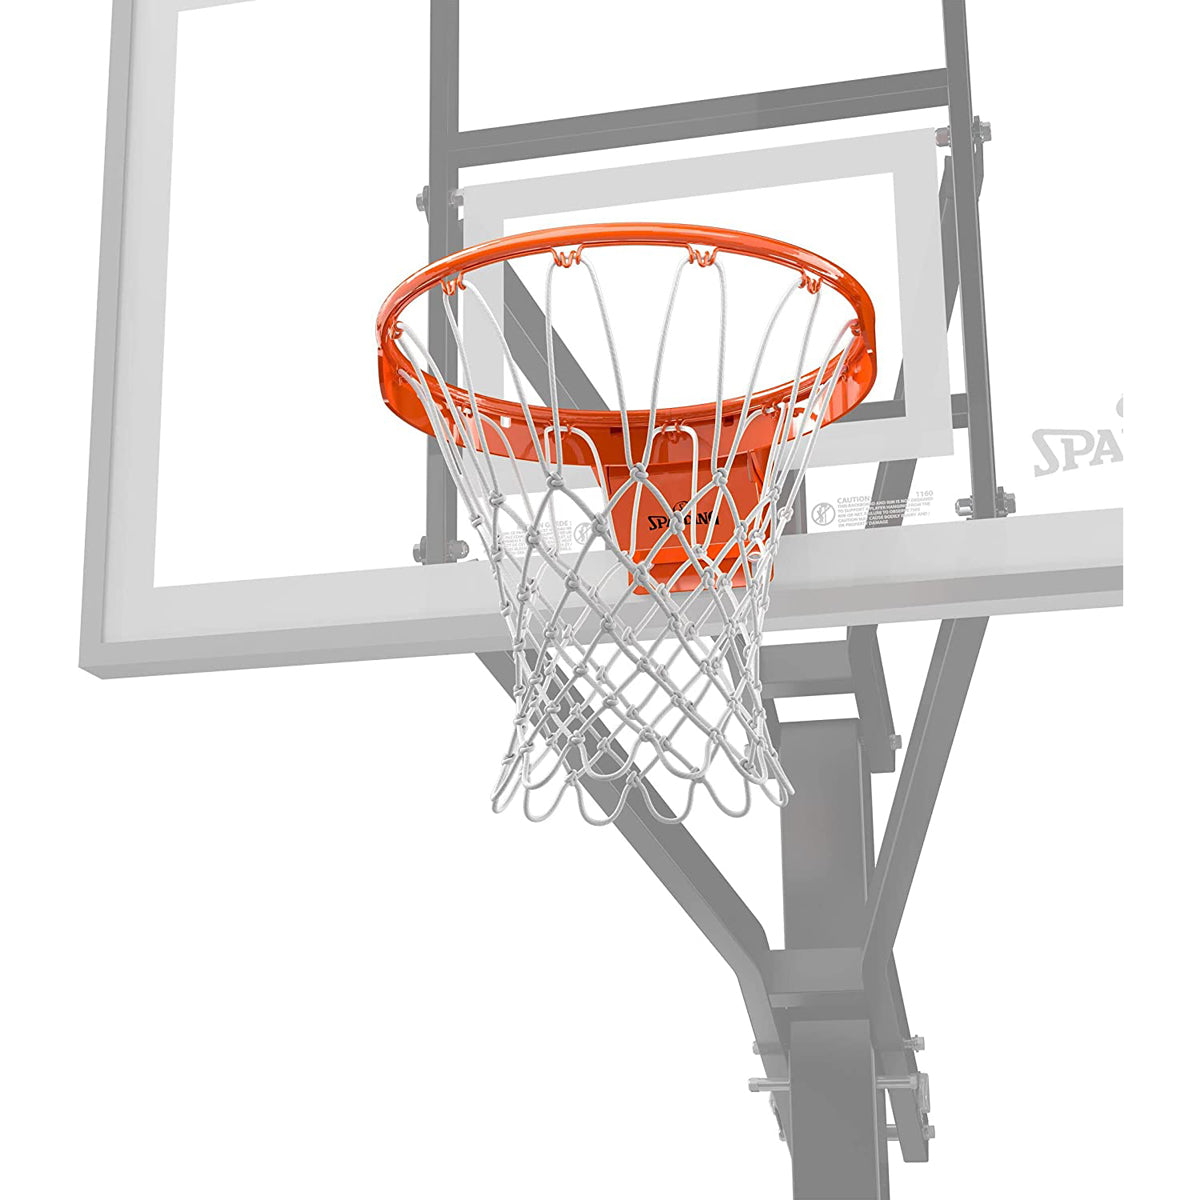 Spalding Flex Goal Indoor/Outdoor Basketball Rim - Orange Spalding